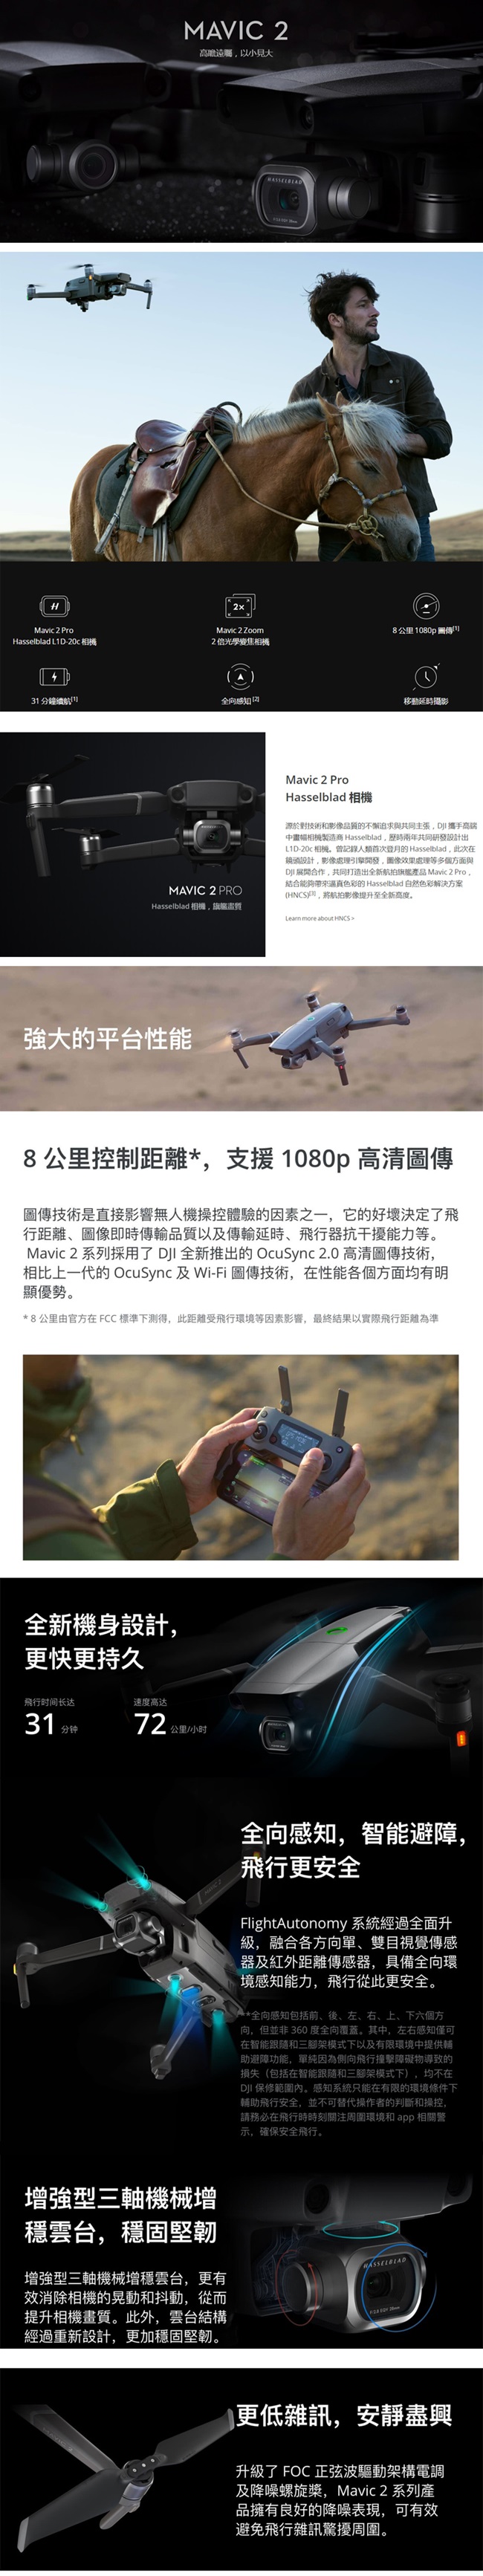 DJI Mavic 2 Pro 專業版空拍機│哈蘇相機